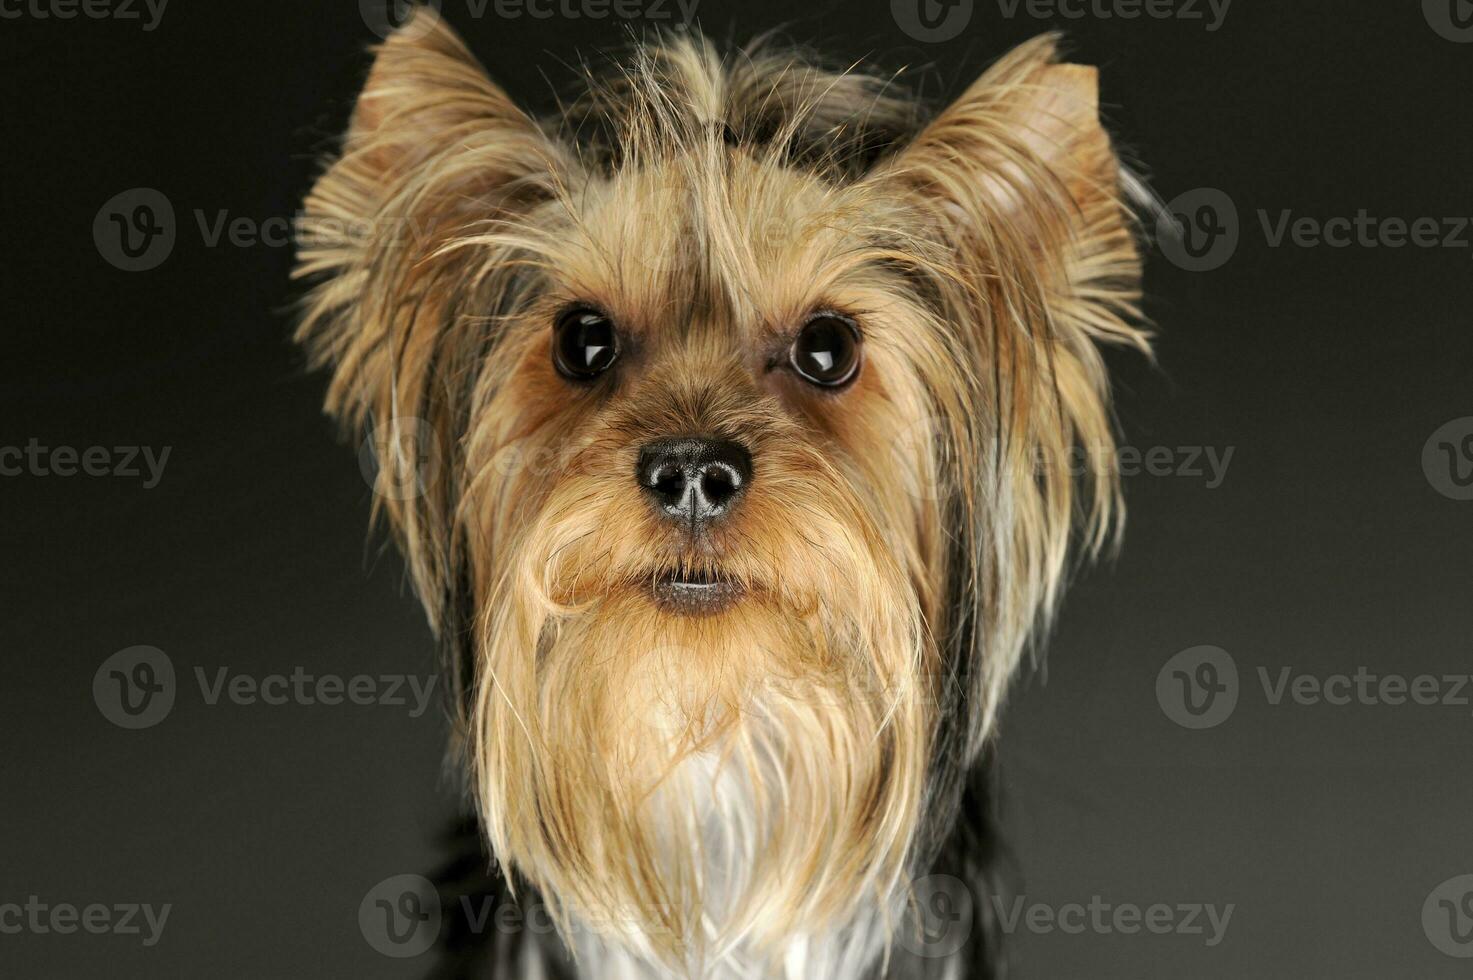 Portrait of an adorable Yorkshire Terrier photo